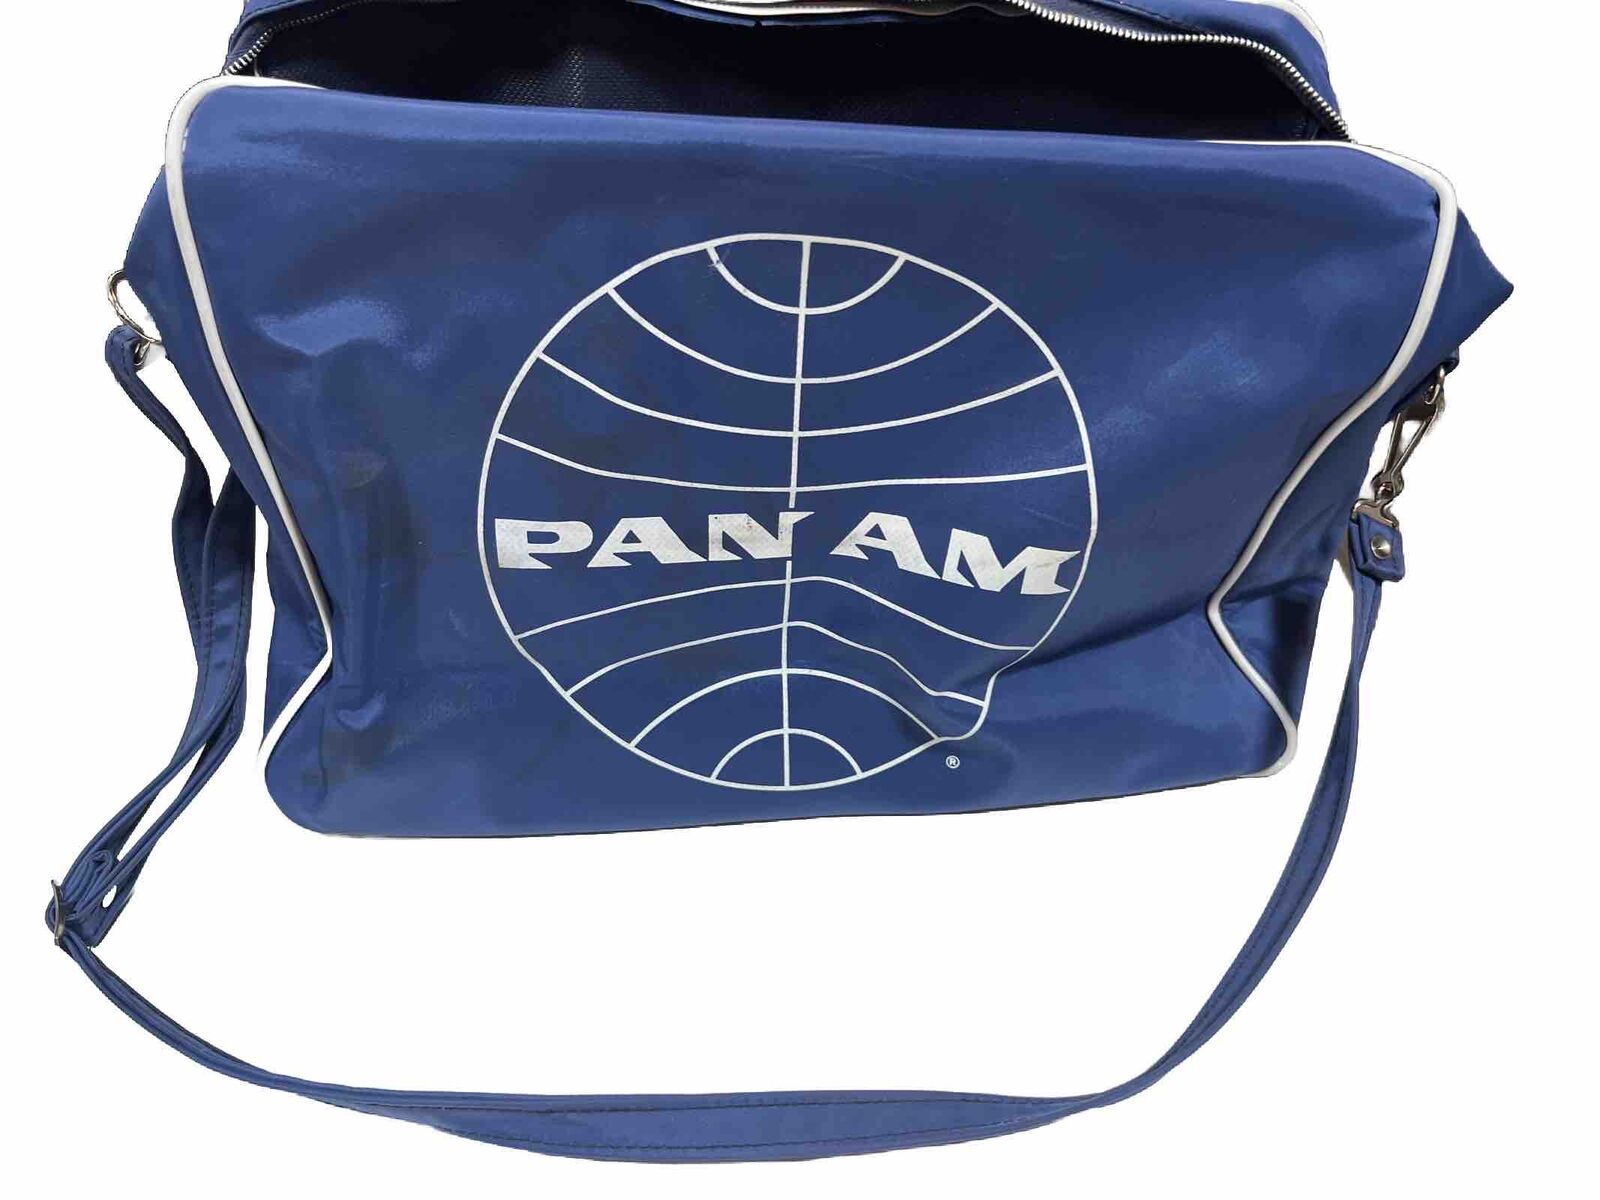 Vintage 70's Pan Am Vinyl Messenger Carry On Bag w/ Adjustable Strap and Zipper